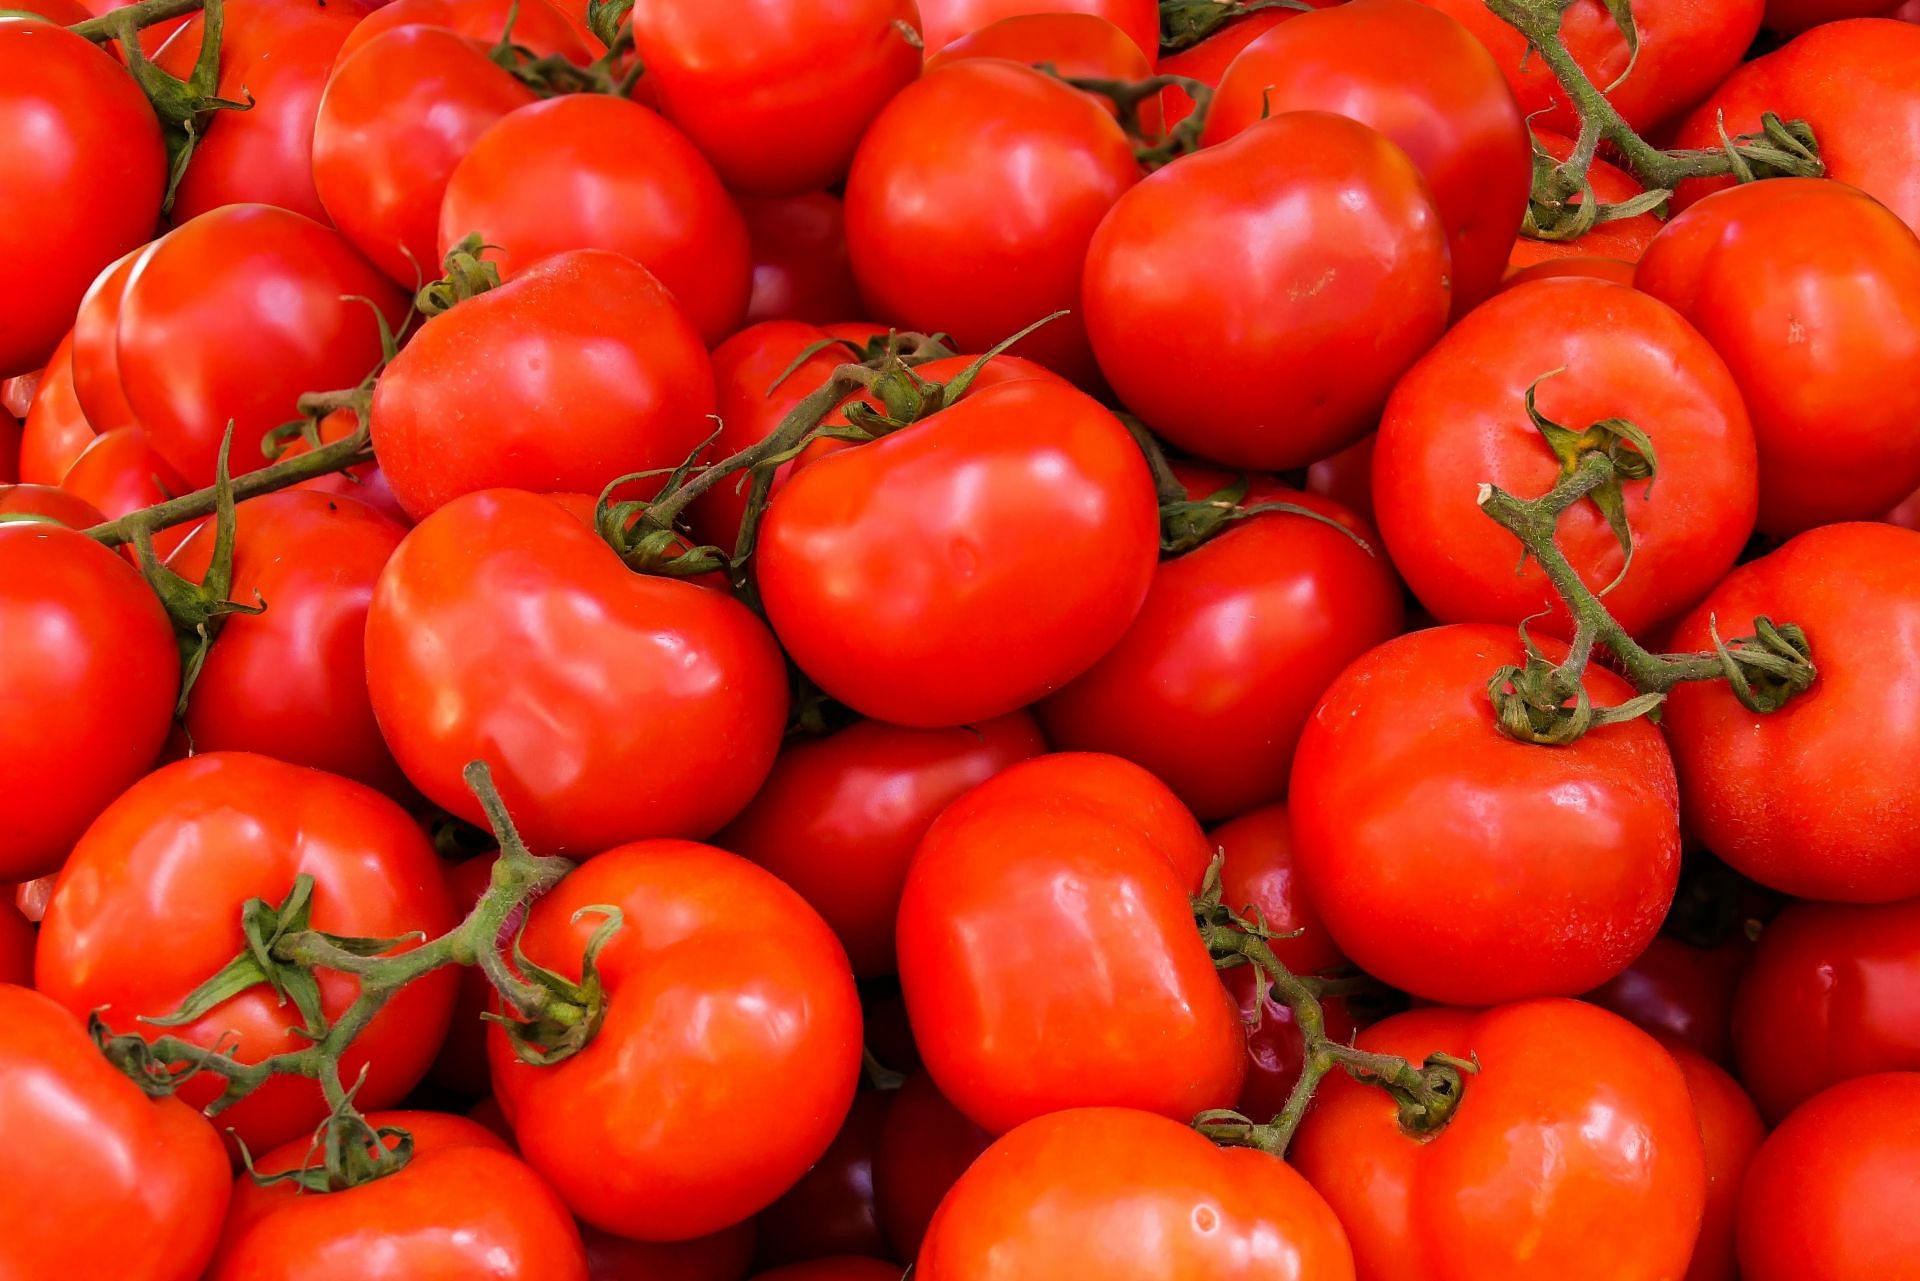 Tomato juice benefits (image sourced via Pexels / Photo by pixabay)